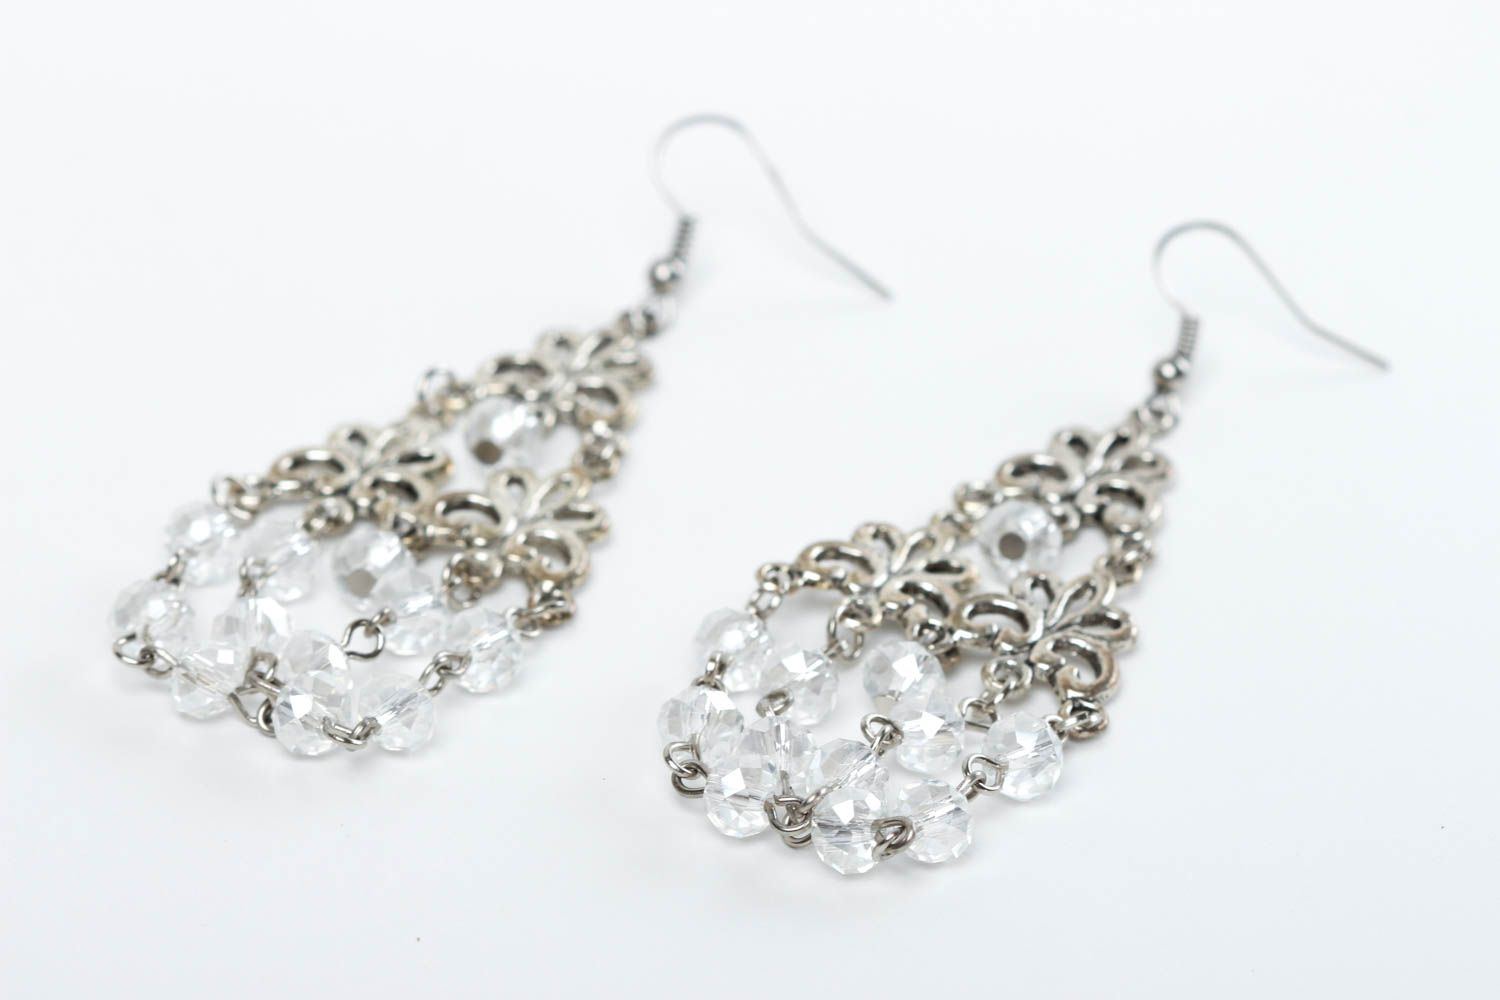 Handmade earrings crystal jewelry designer accessories stylish earrings photo 3